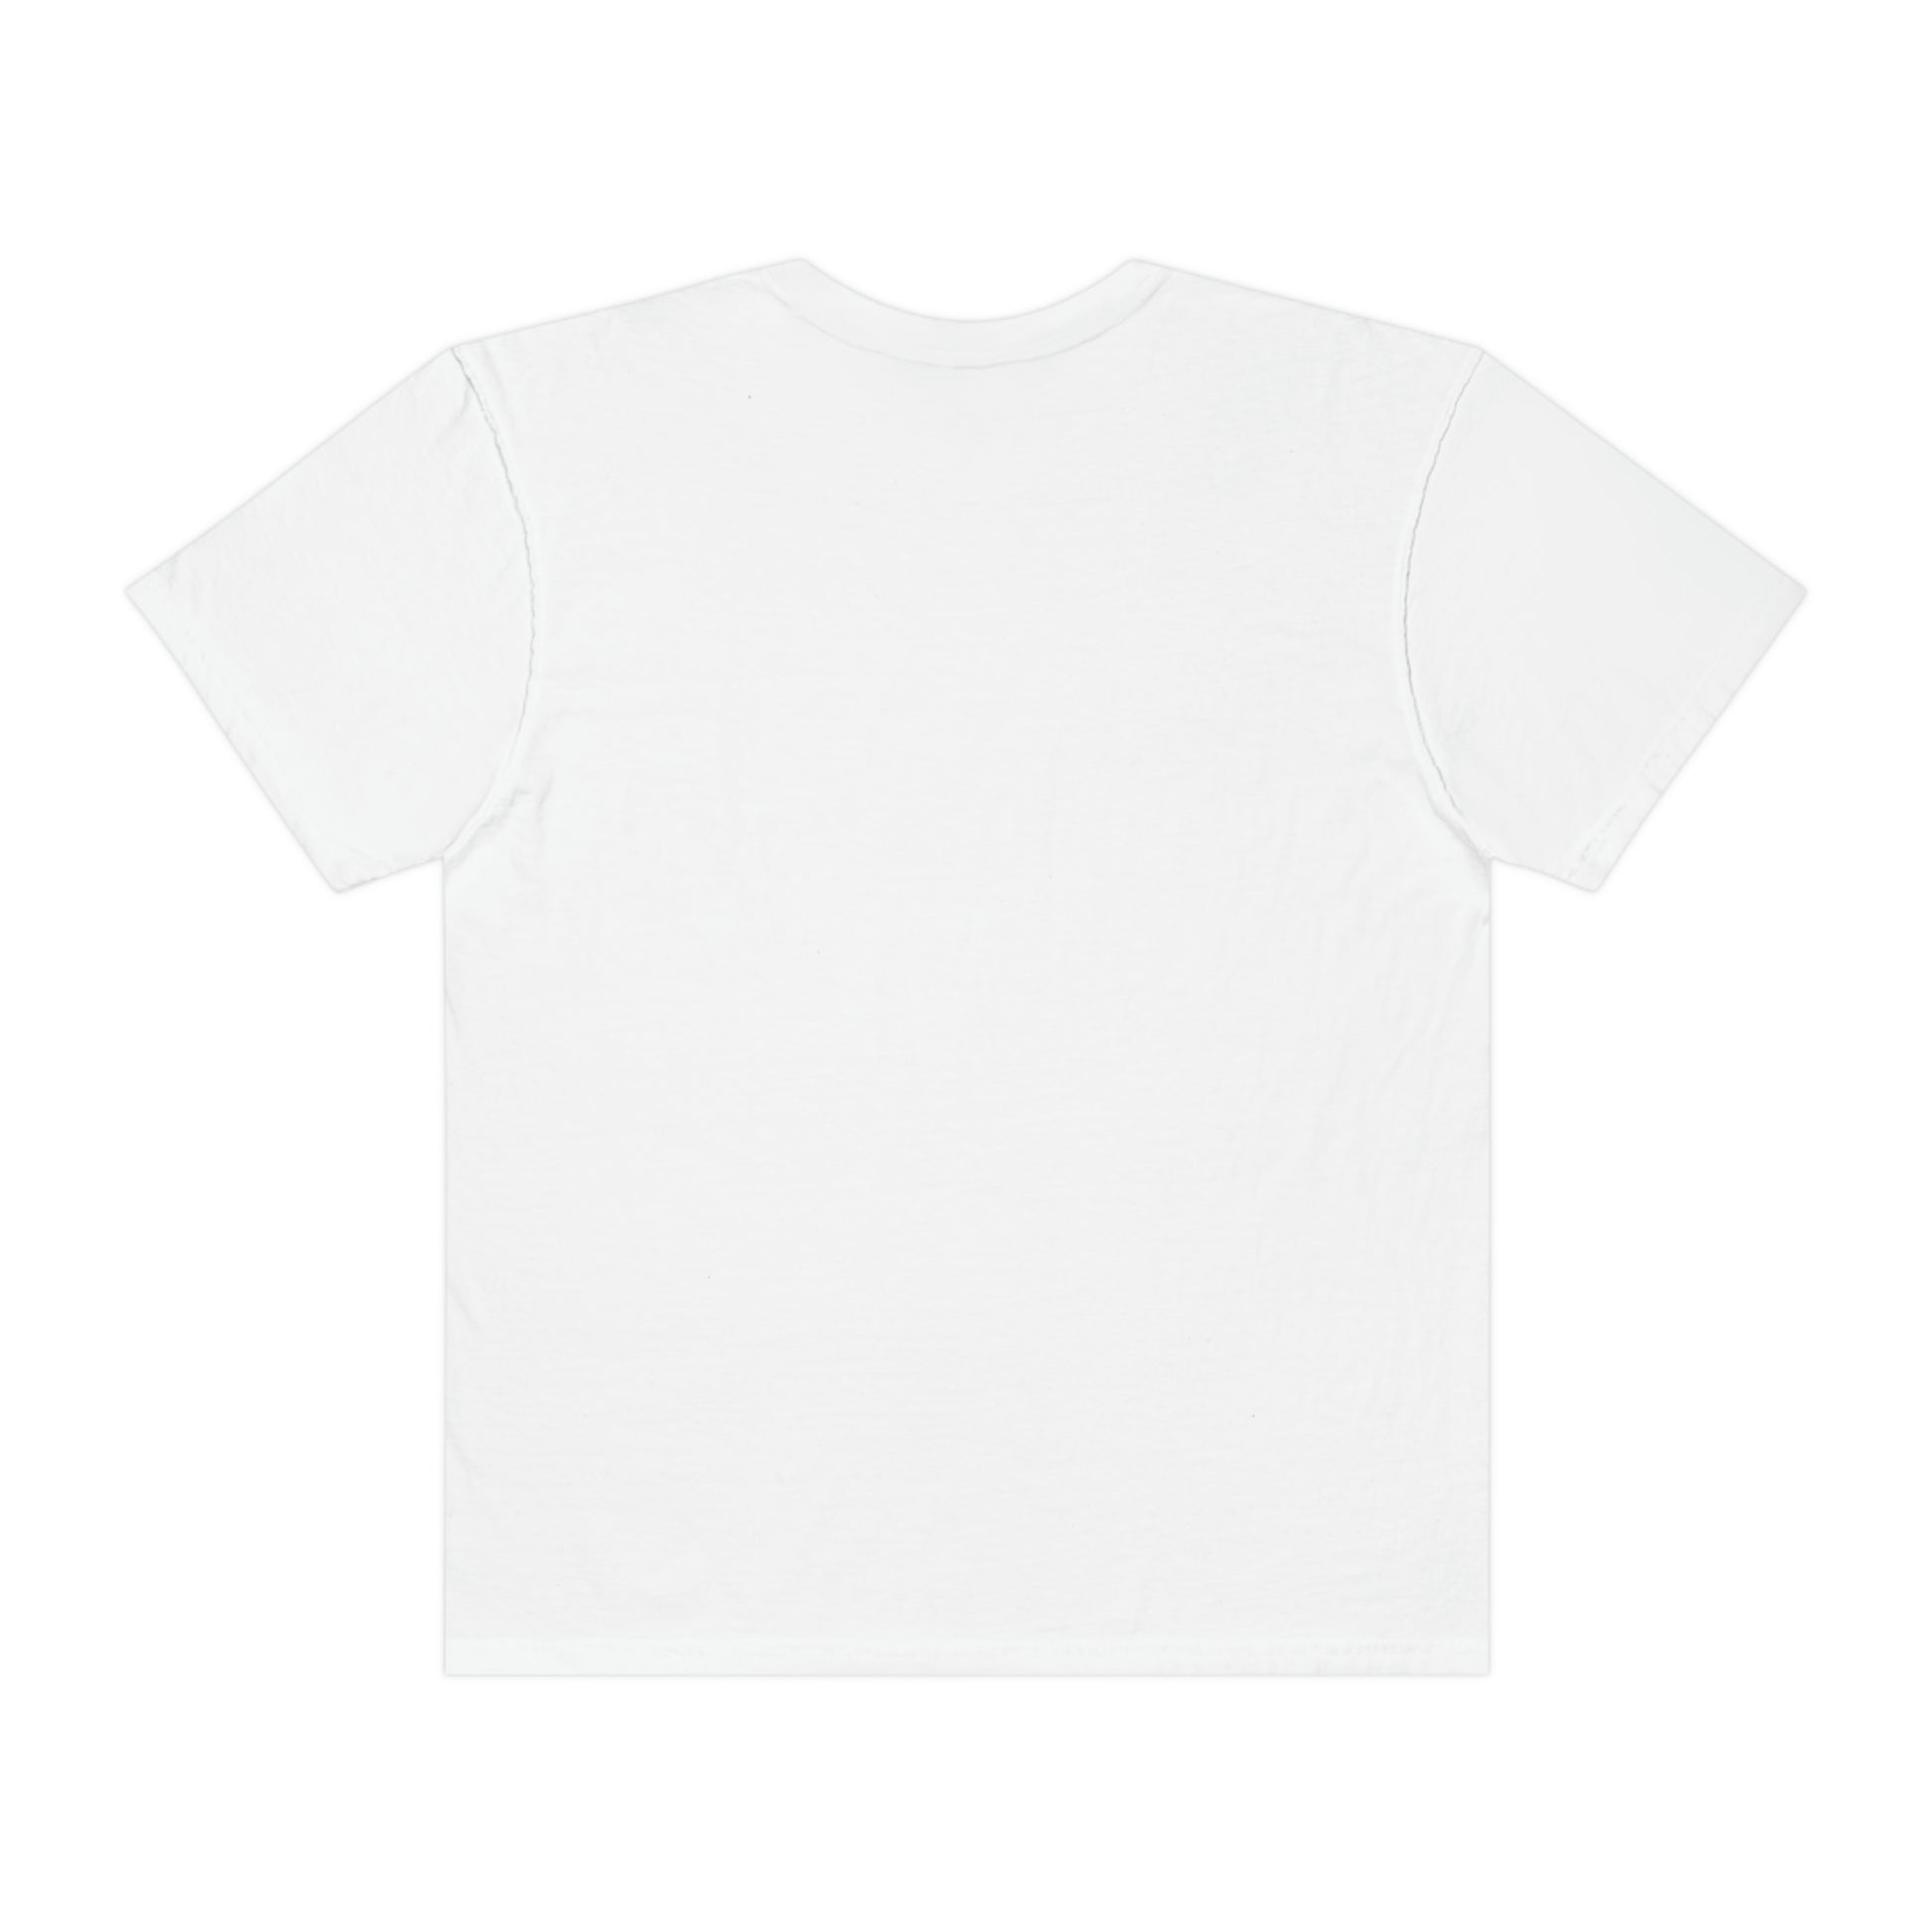 COLLEGE *WAS HARD white t-shirt